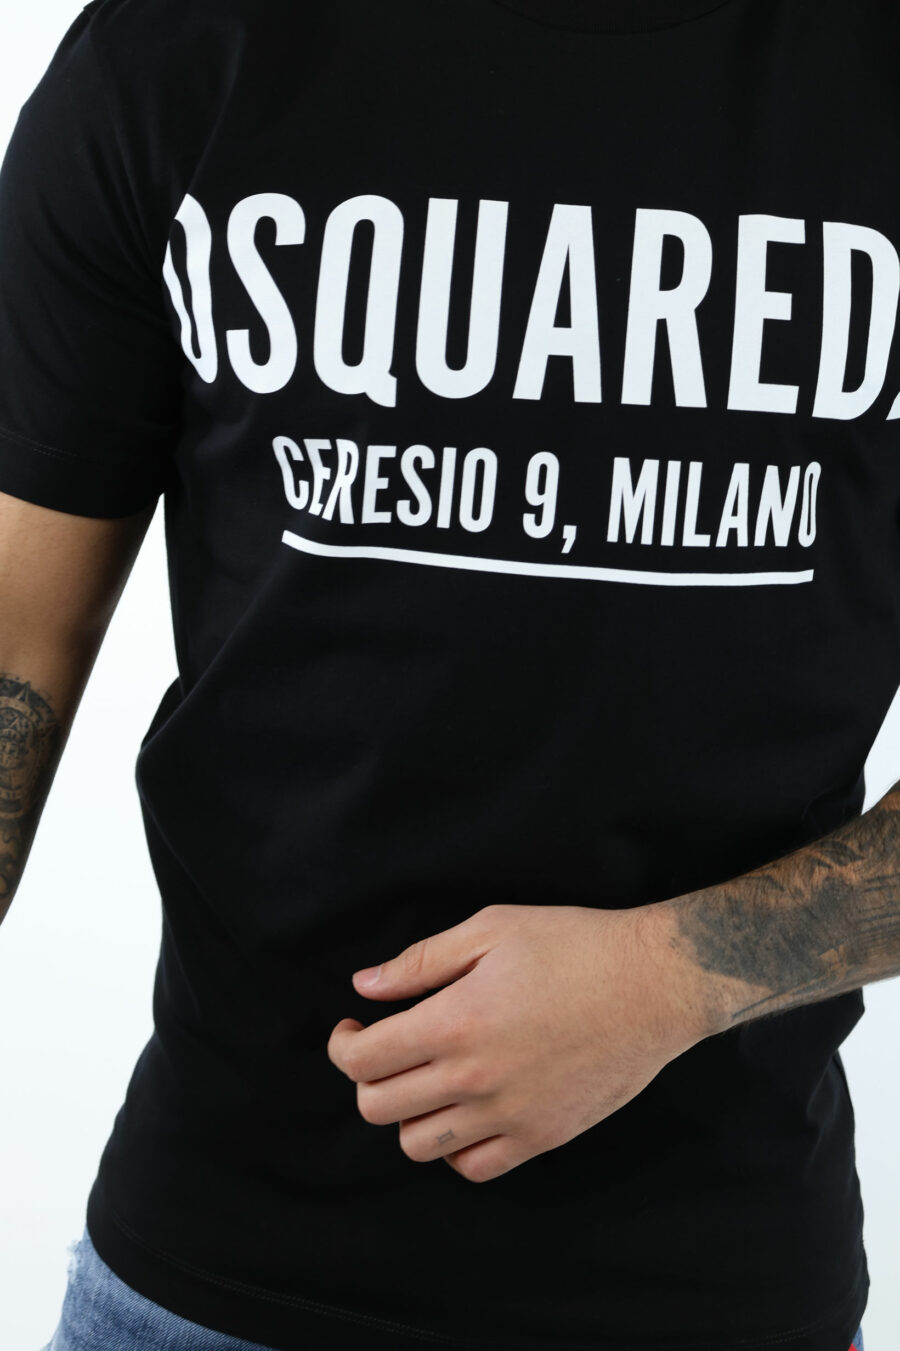 Black T-shirt with maxilogo "ceresio 9 milano" - 106863